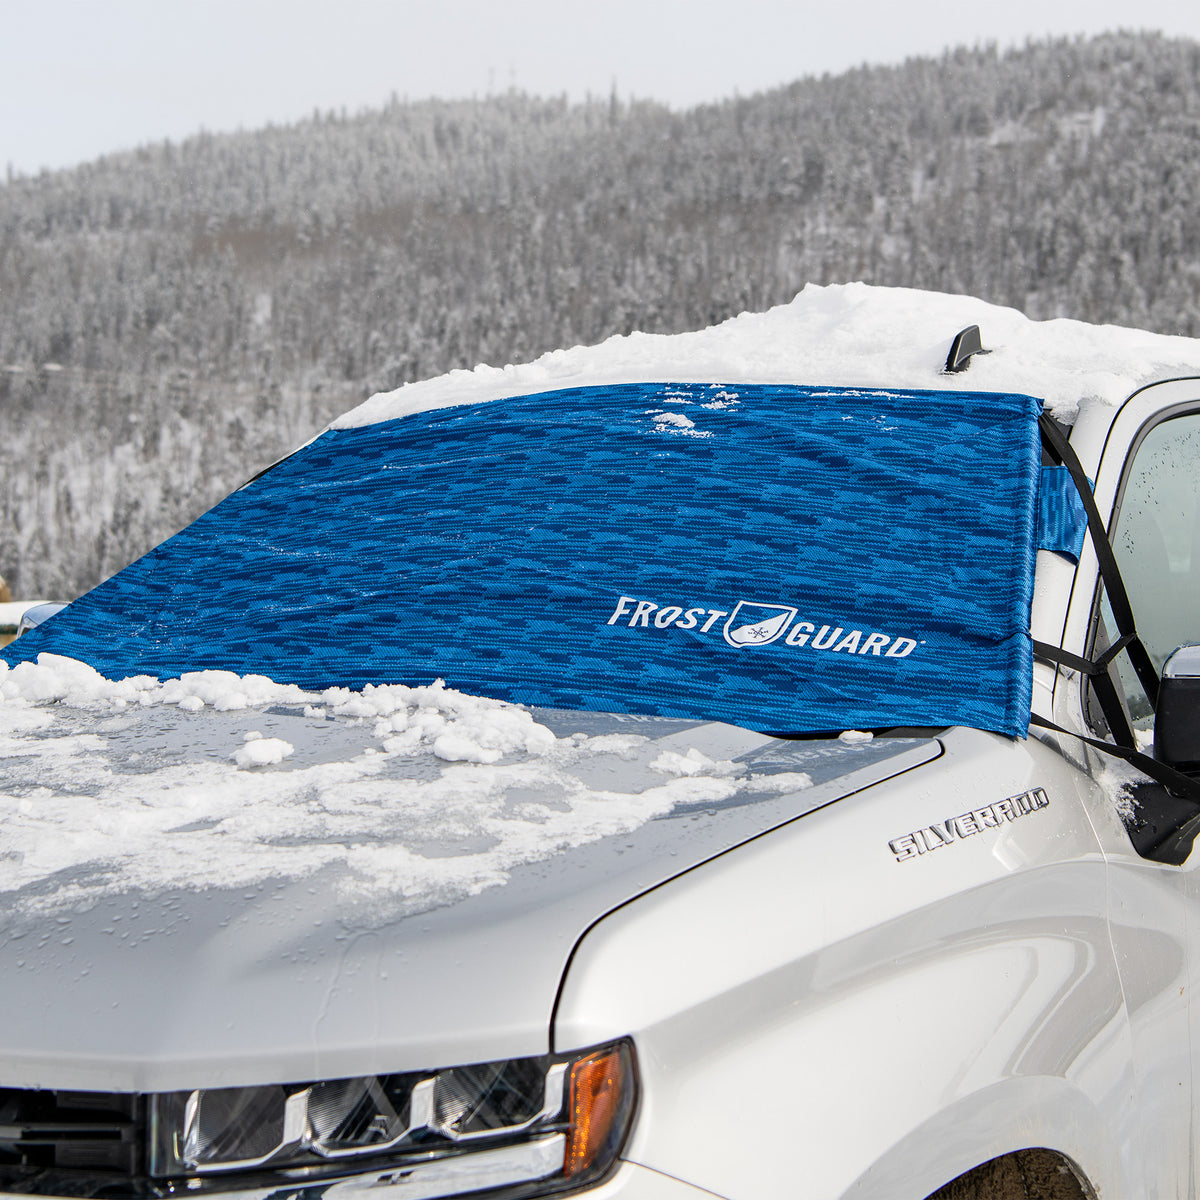 DELK - Frost Guard Pro Snow Shield For Car Windshields FG-PRO